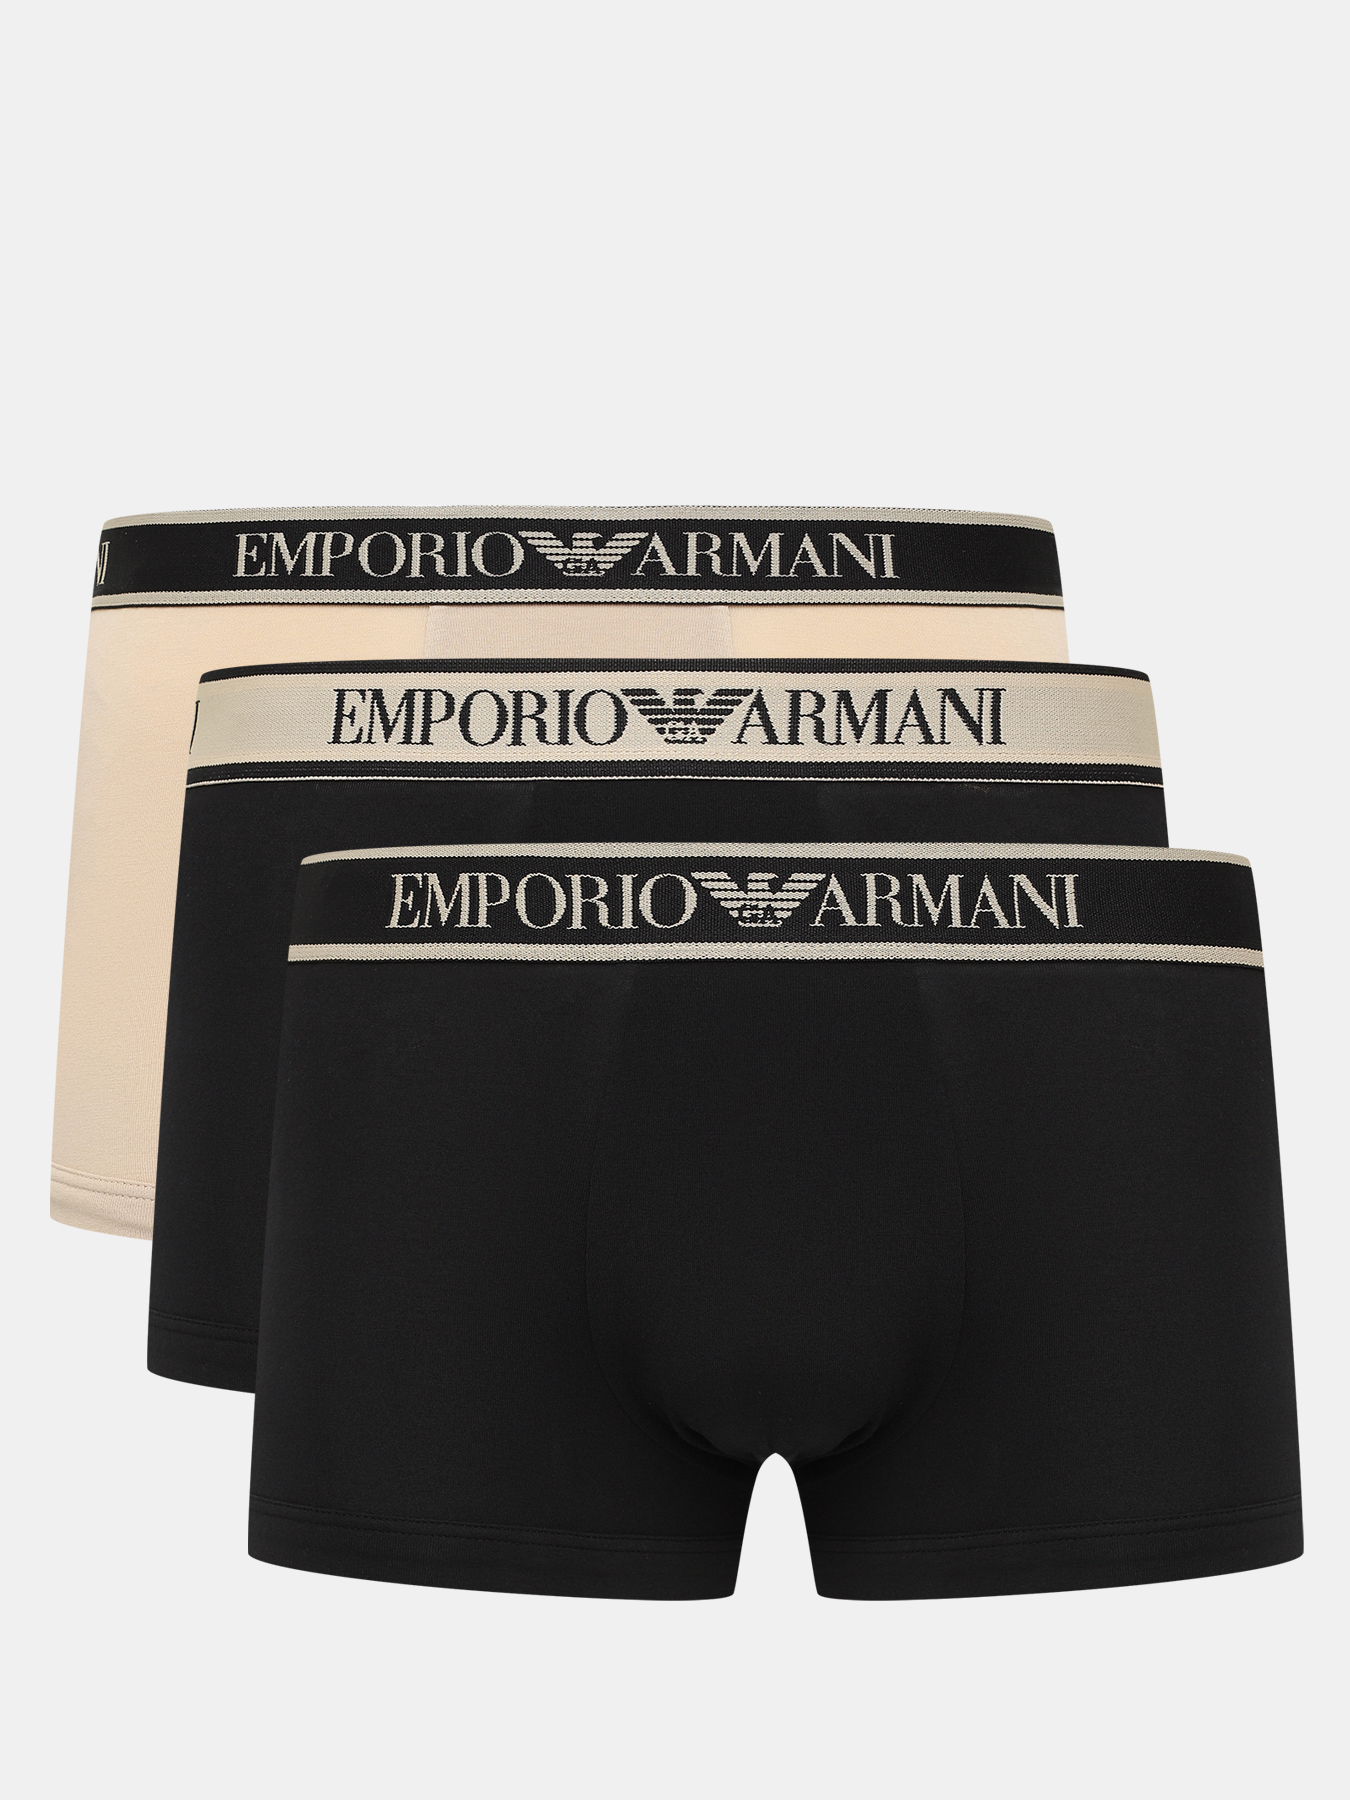 Боксеры (3 шт) Emporio Armani 438109-044, цвет мультиколор, размер 50